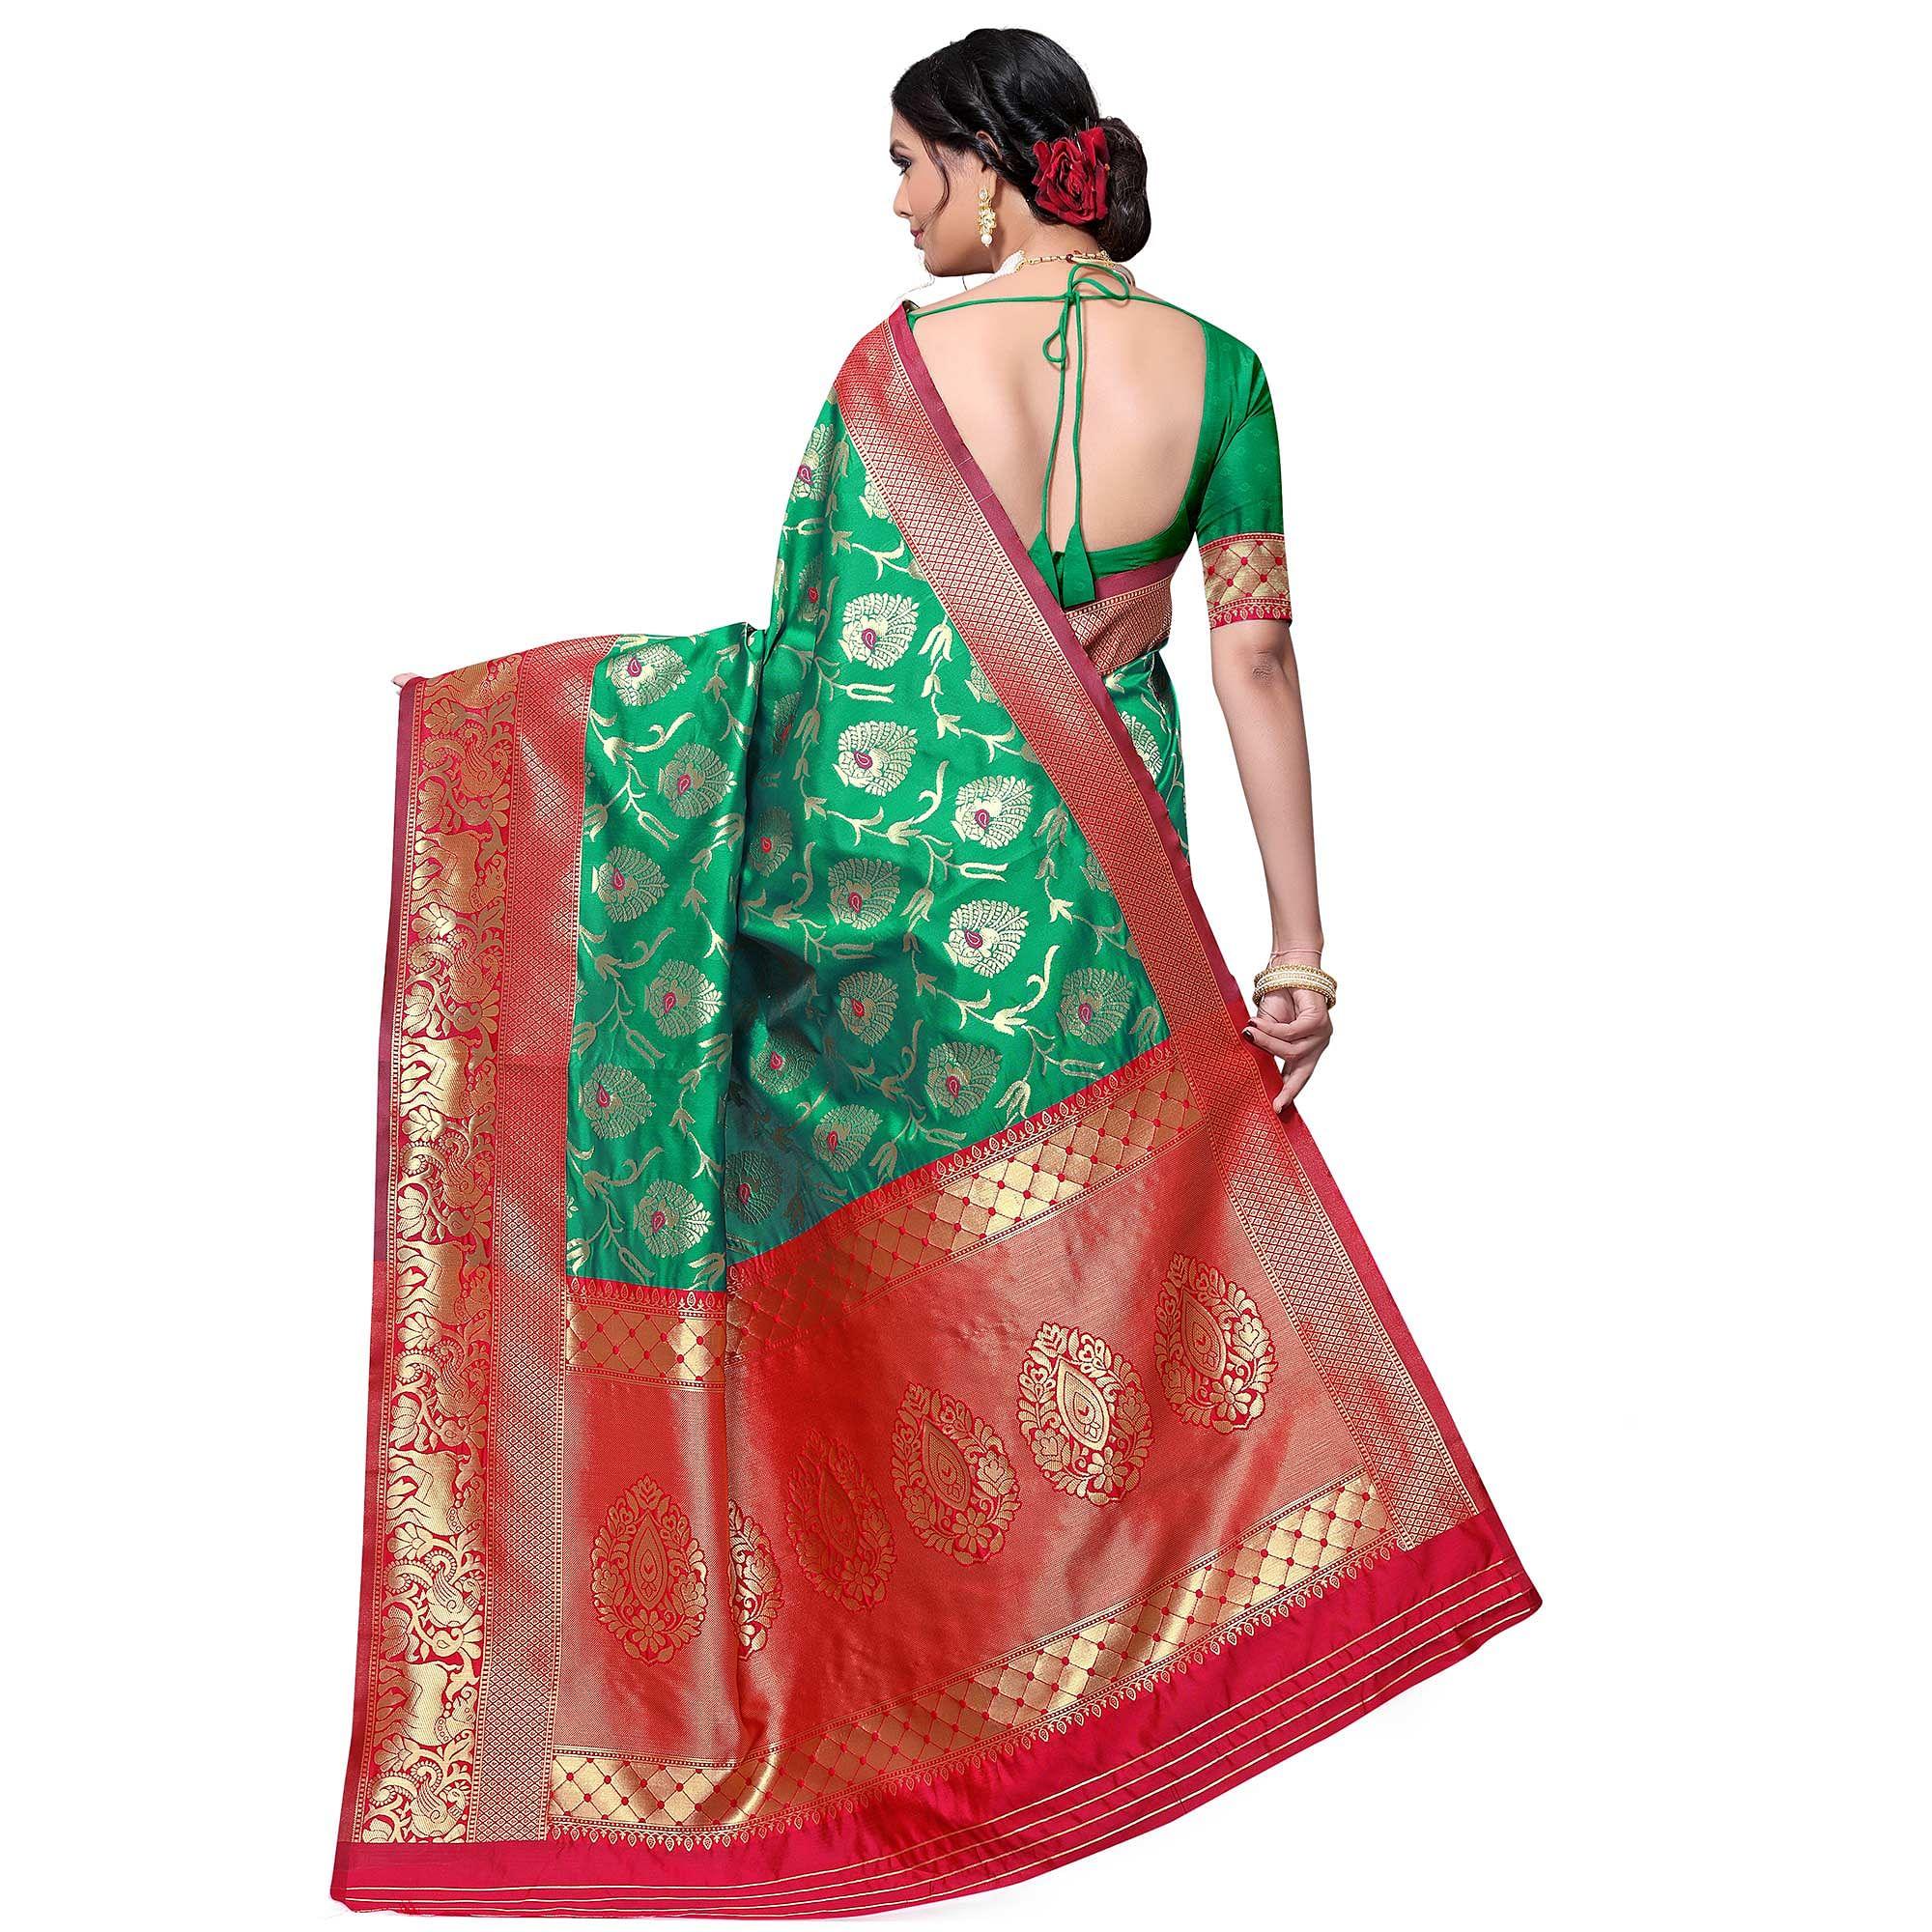 Groovy Green Colored Festive Wear woven Kota Lichi Banarasi Silk Saree - Peachmode